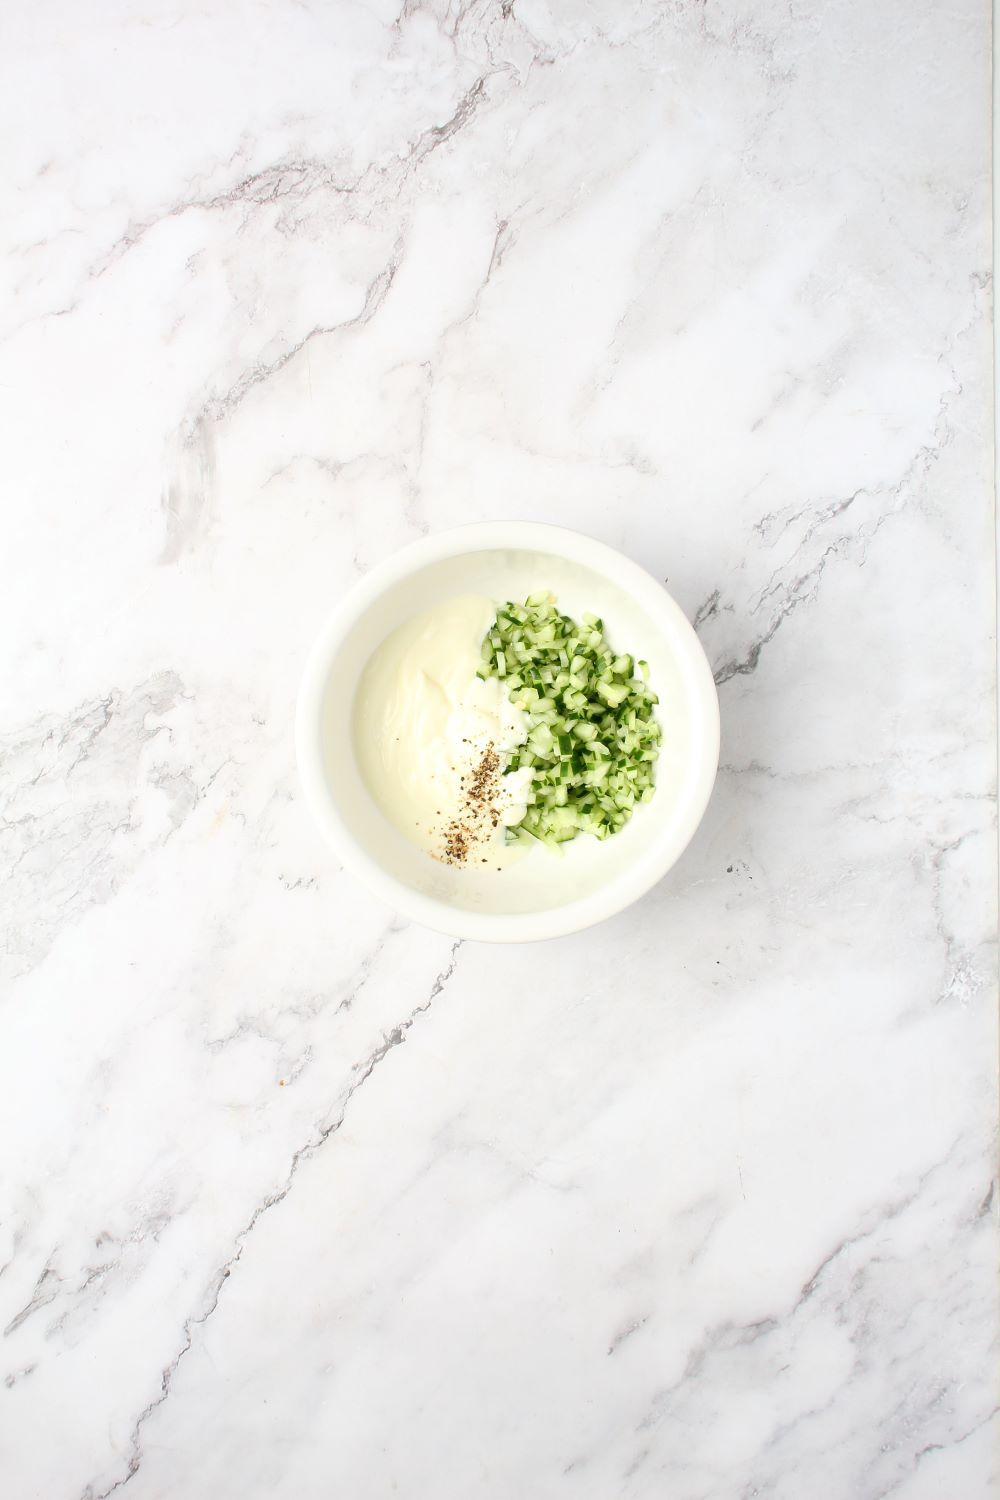 Combining yogurt, lemon juice, diced cucumber, and minced garlic in a bowl